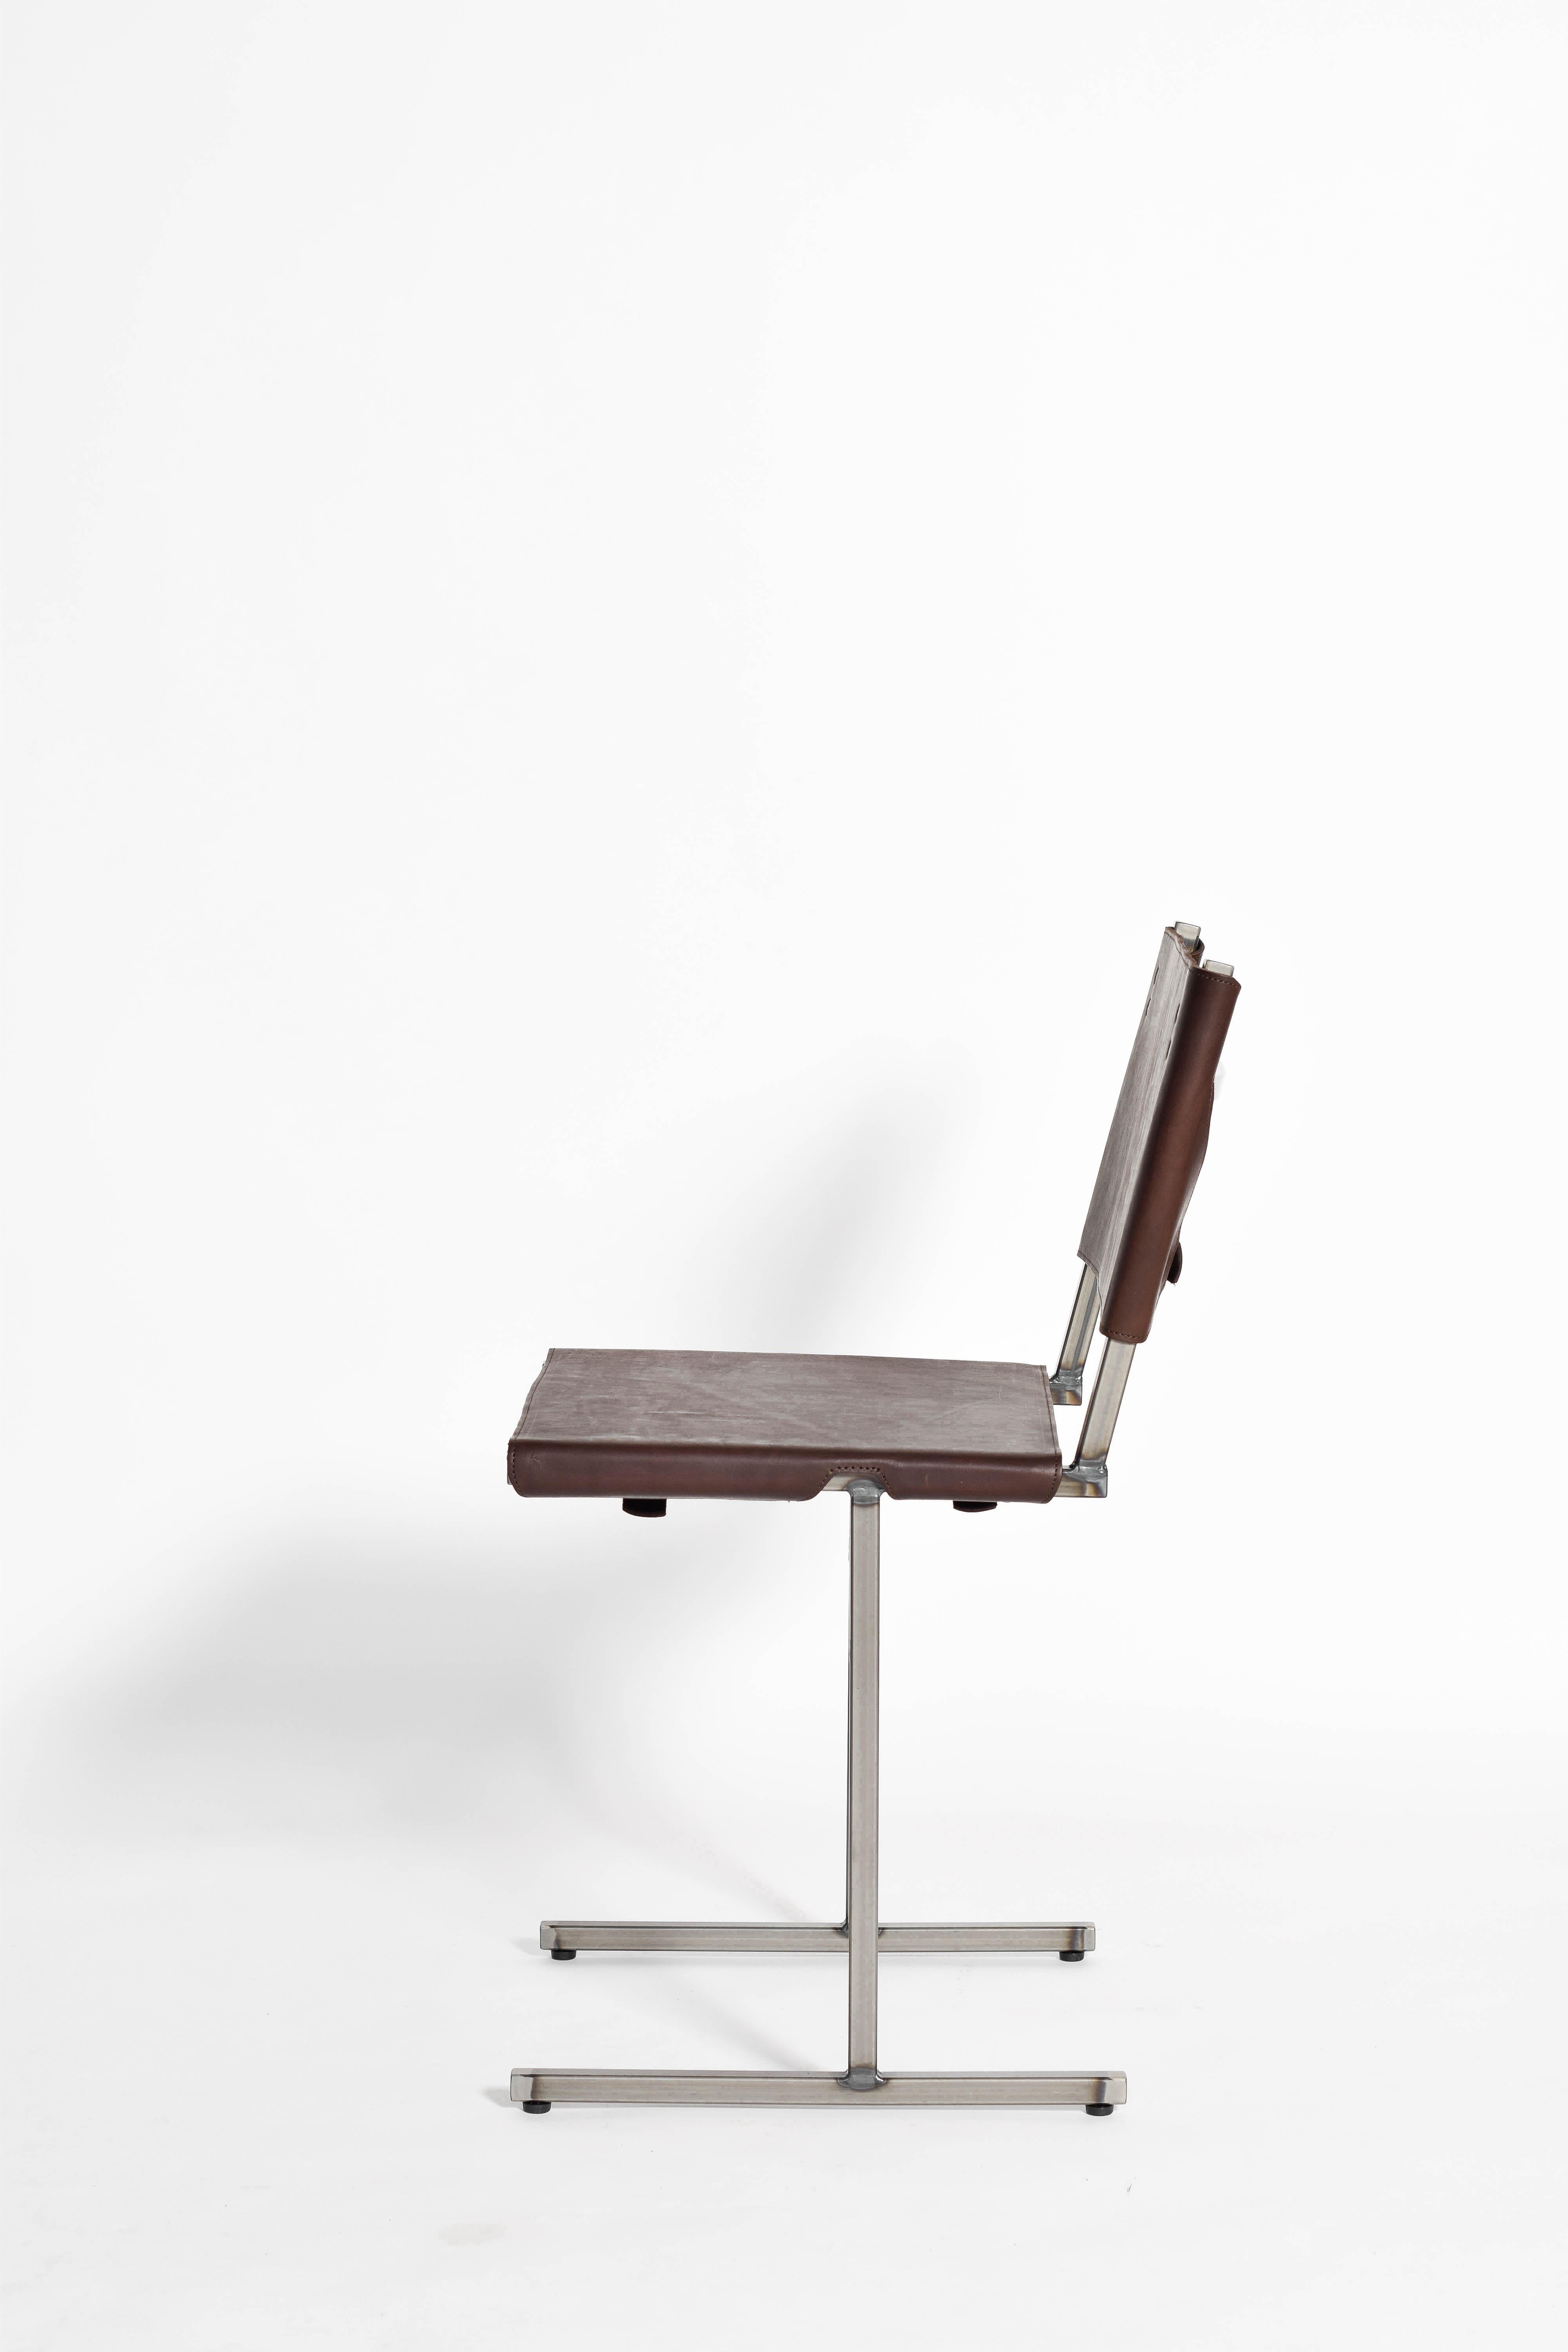 Dutch Chocolate Memento Chair, Jesse Sanderson